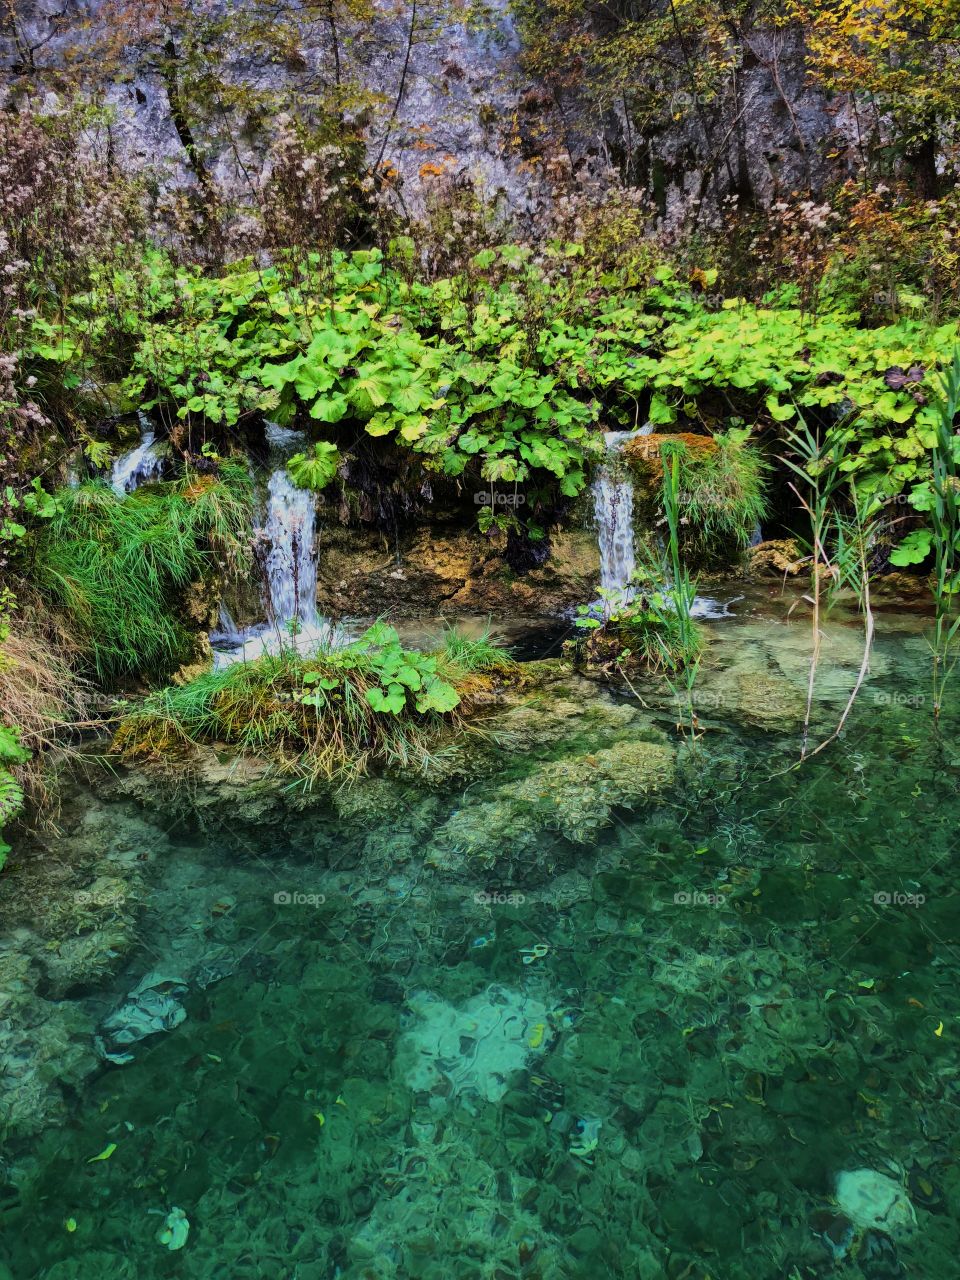 Wonderful landscape in Croatia , Plitvice lakes